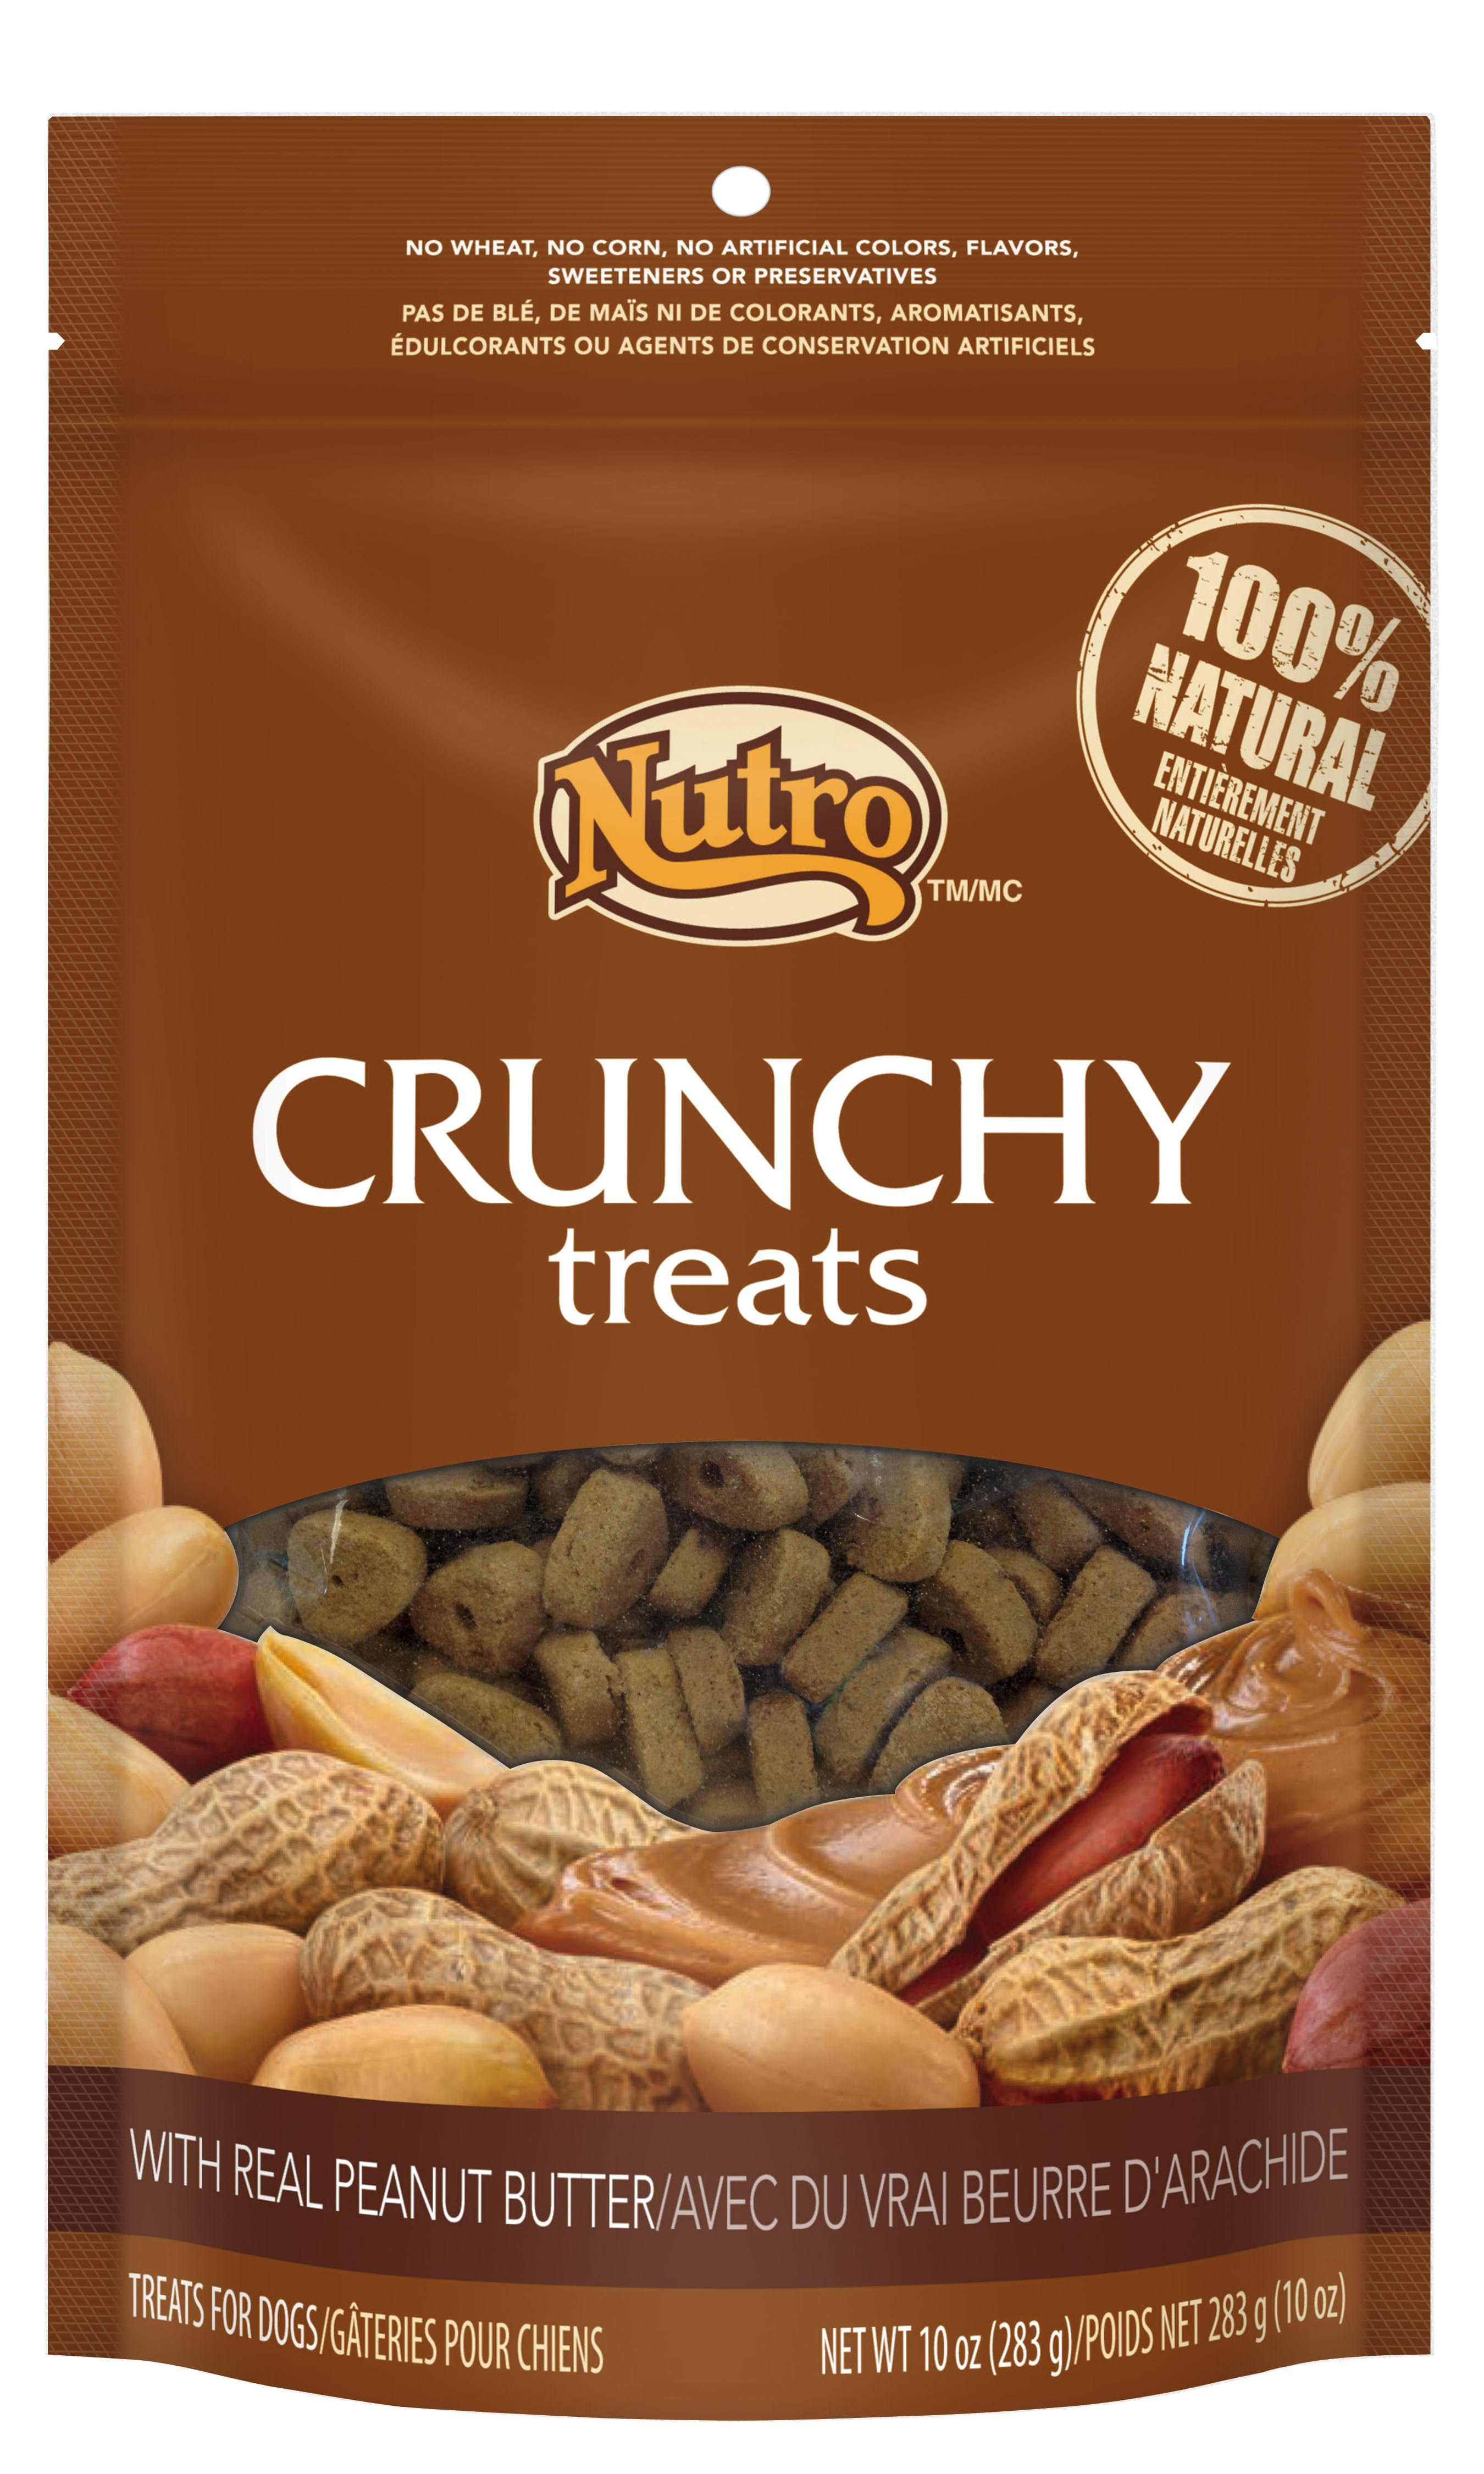 Nutro Crunchy Dog Treats - 10oz, Peanut Butter